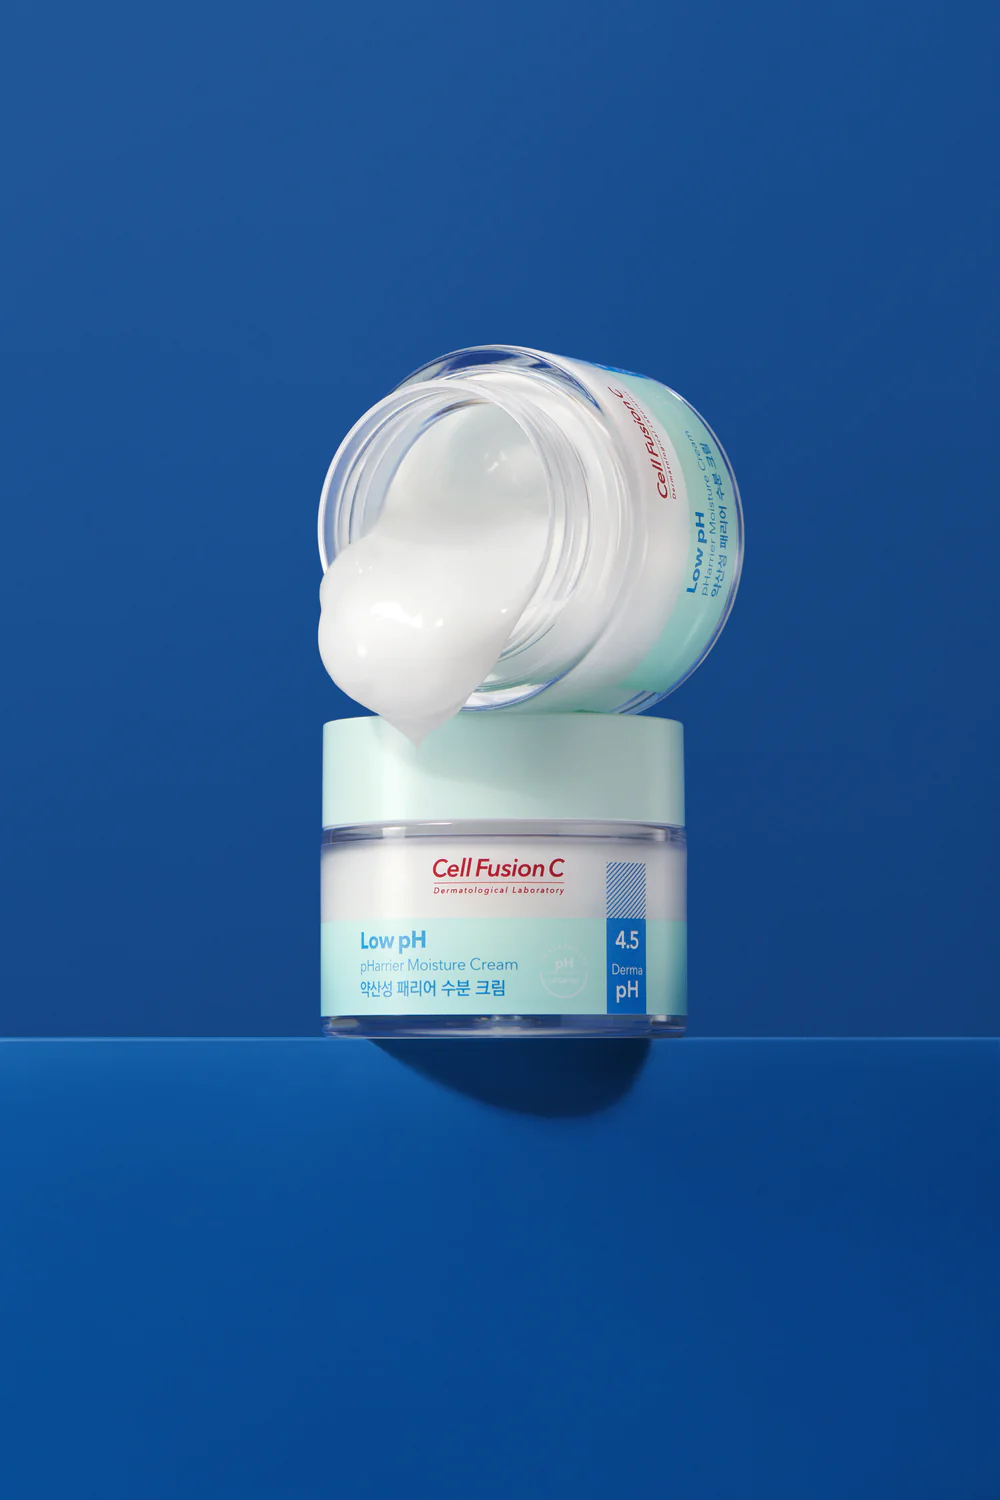 [CellFusionC] Low pH pHarrier Moisture Cream - 80ml